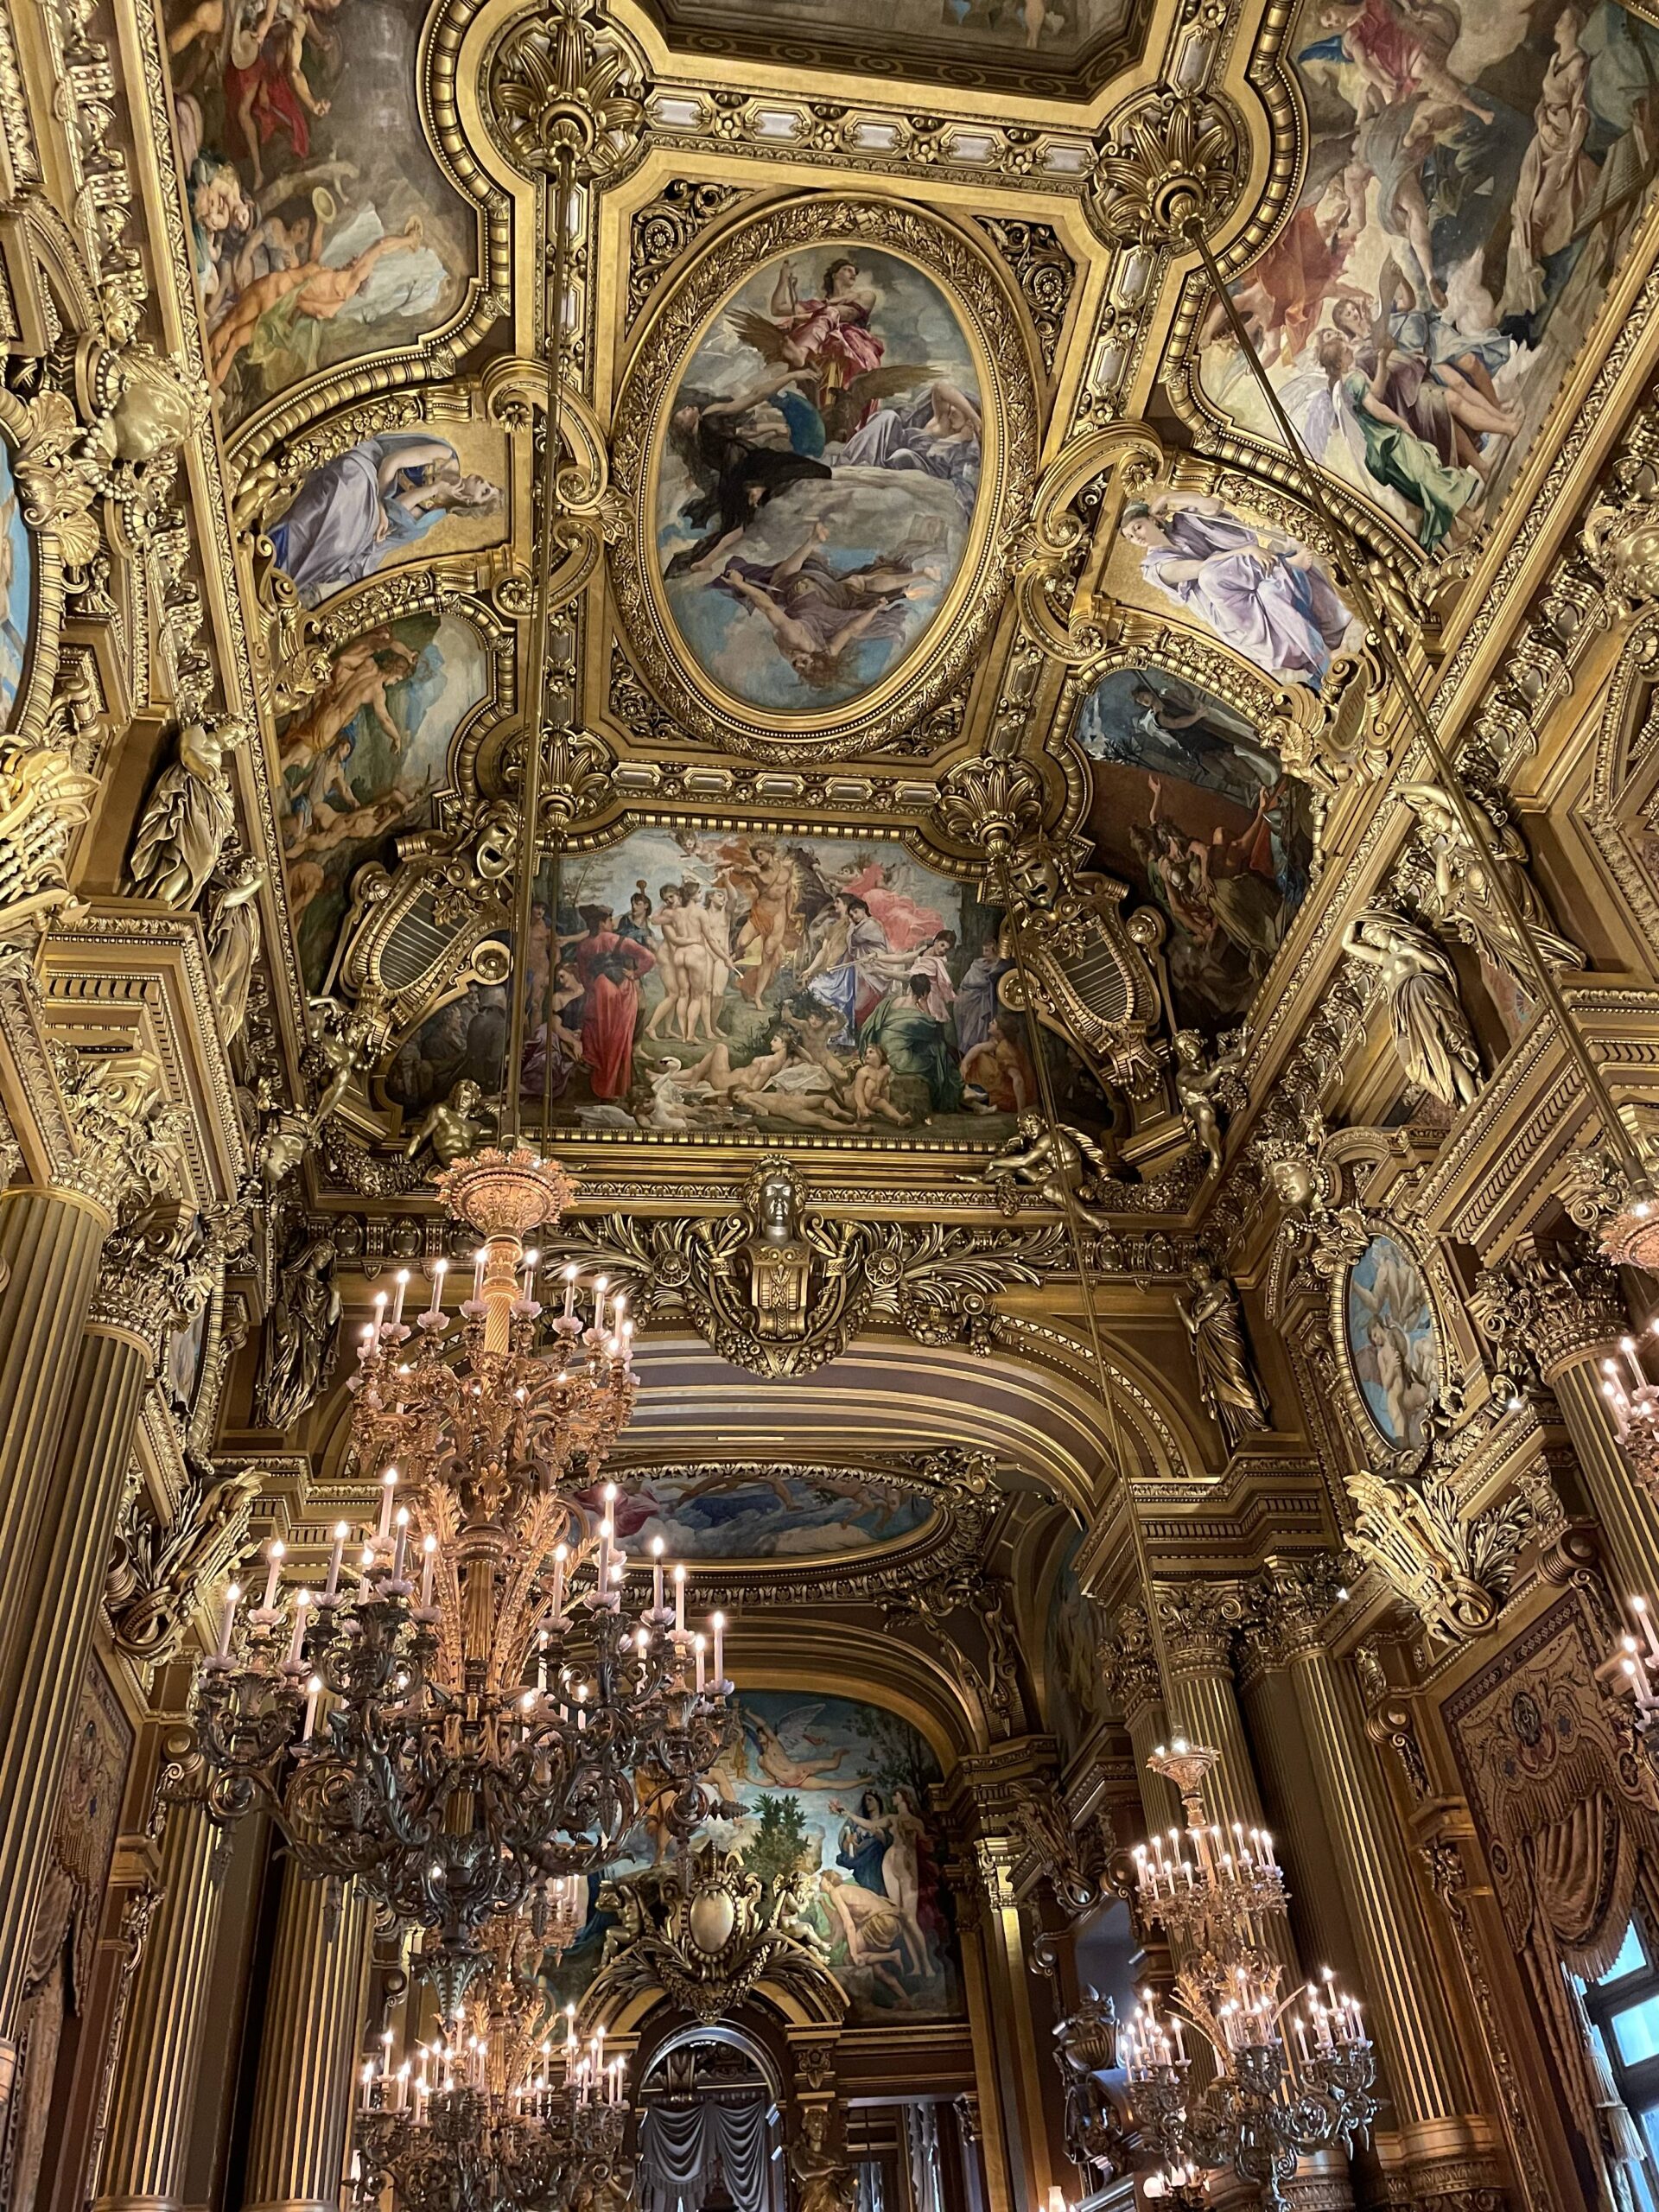 Visit to the Opéra Garnier